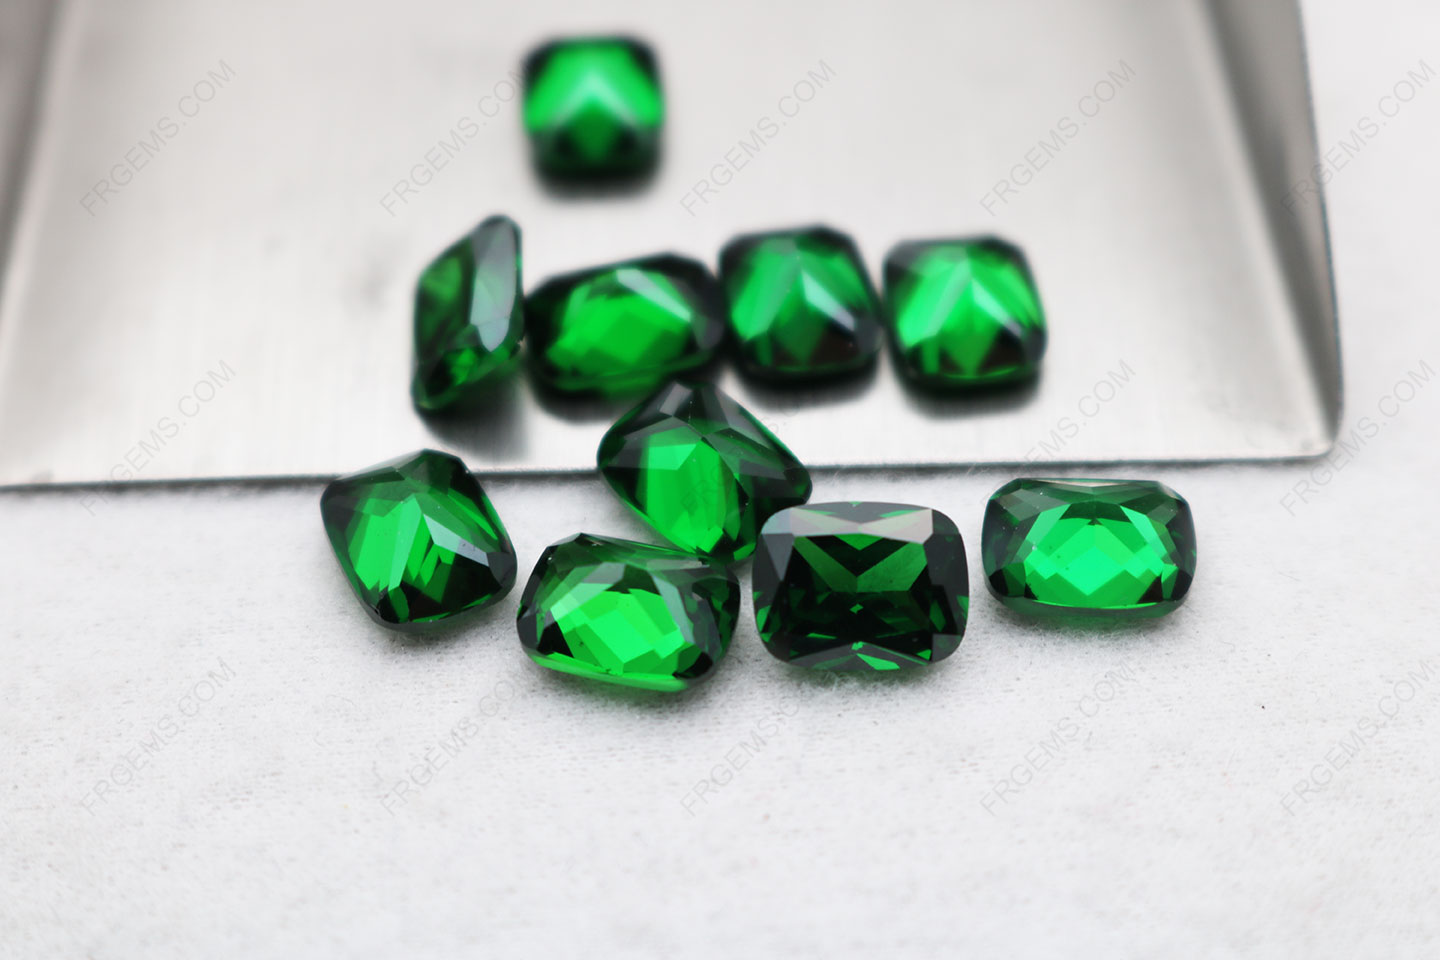 Cubic Zirconia Green Color Elongate Cushion Shape Princess Cut 9x7mm Loose gemstones